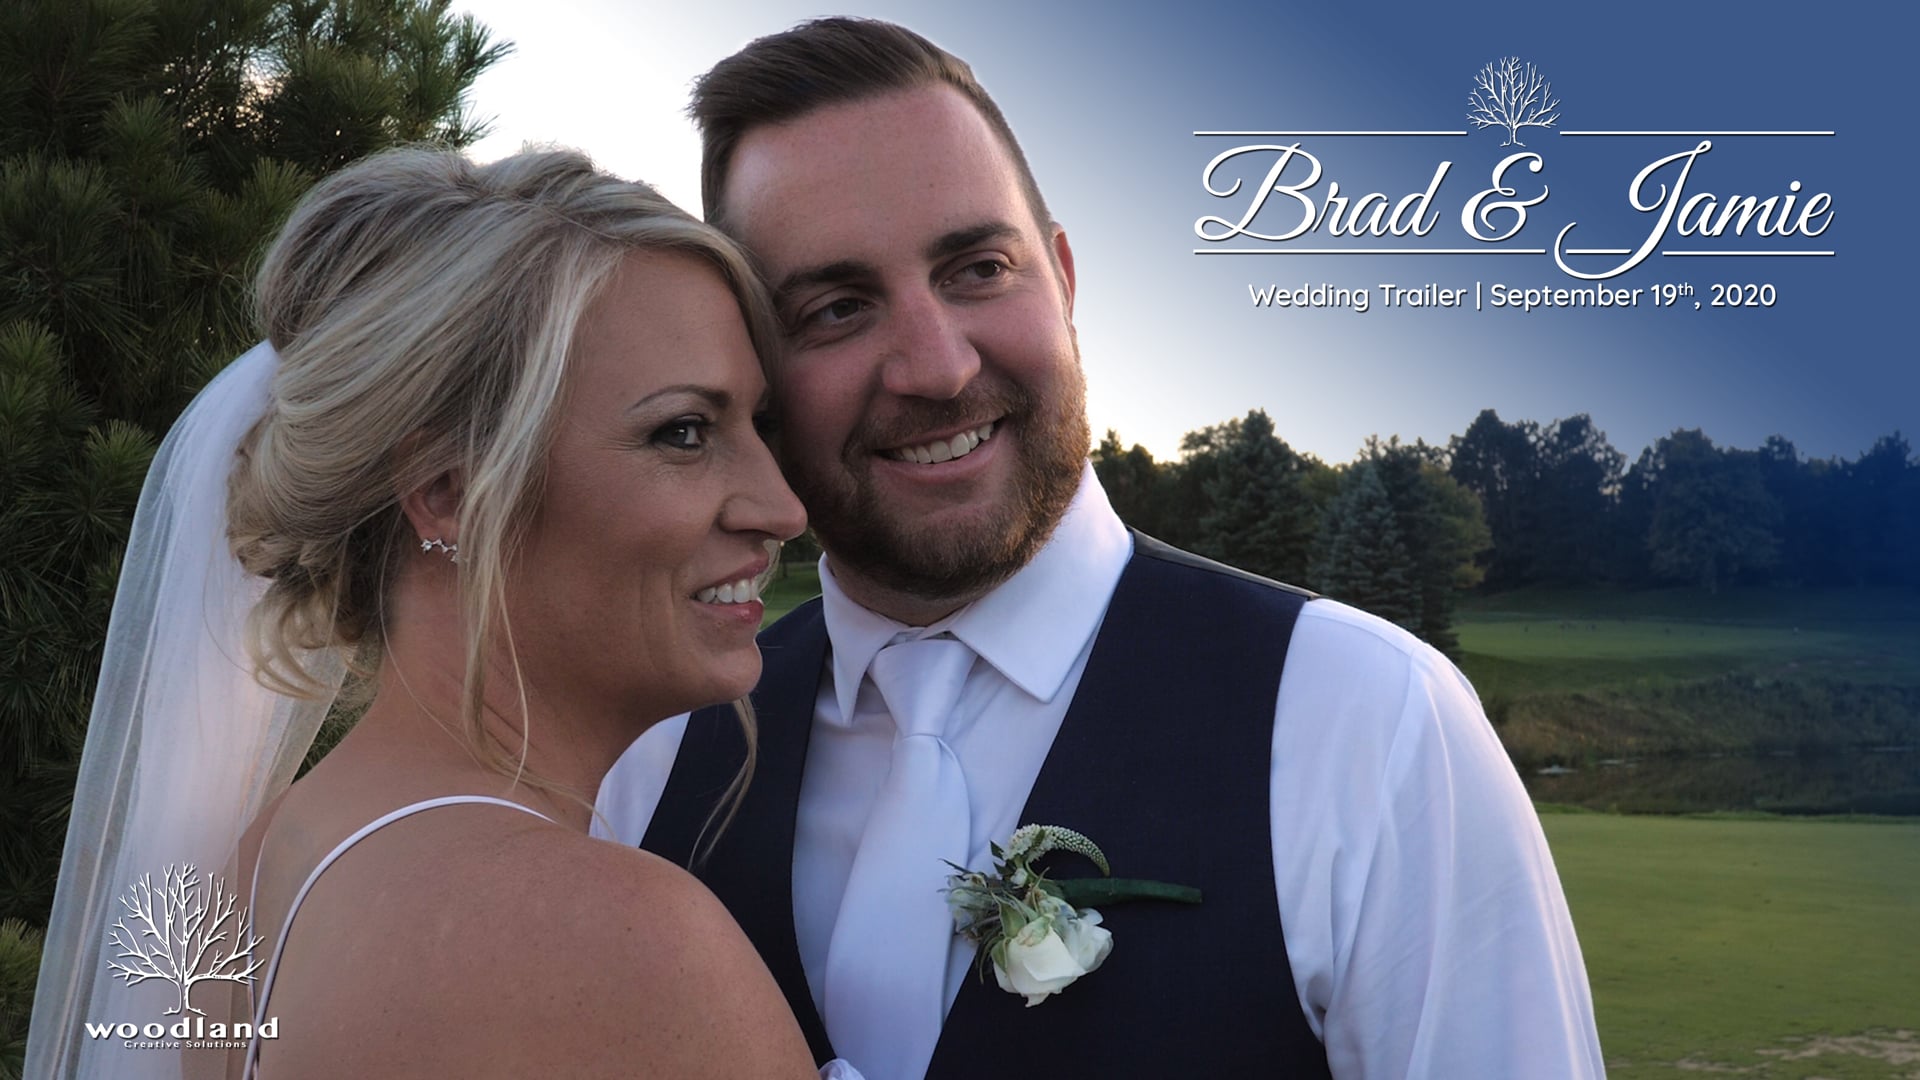 Brad & Jamie - Wedding Trailer